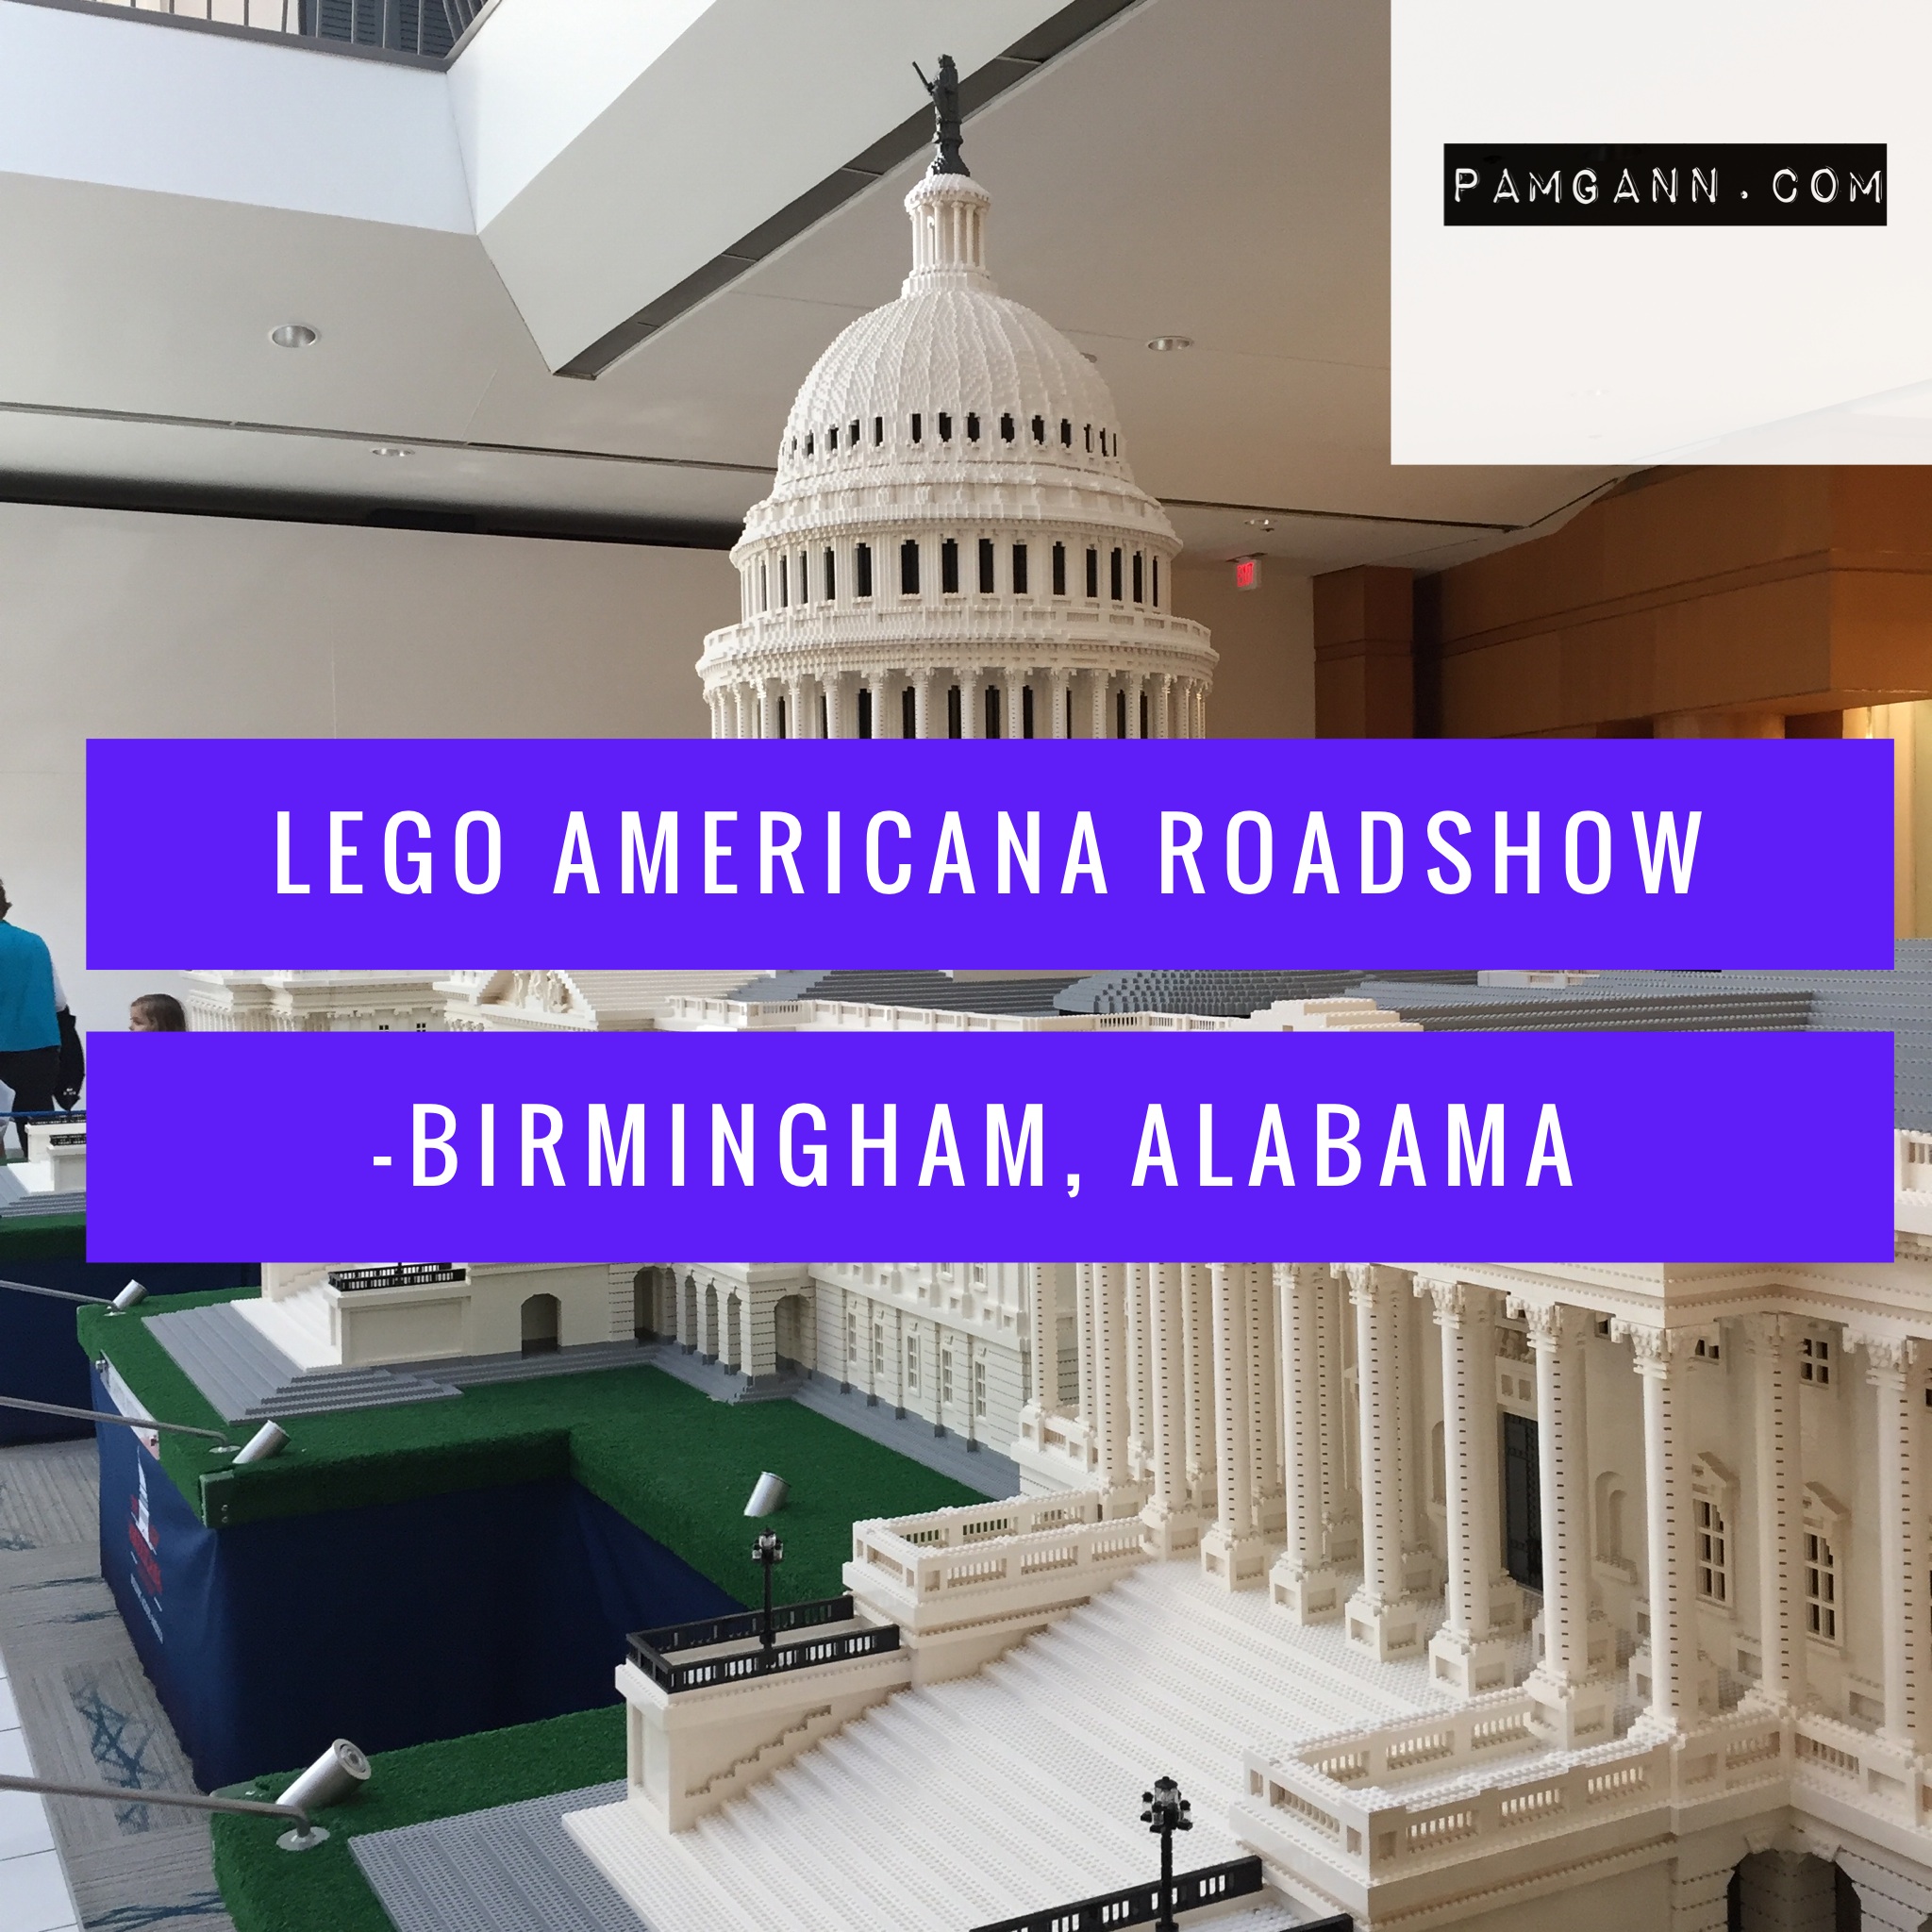 Lego Americana Roadshow Birmingham, Alabama